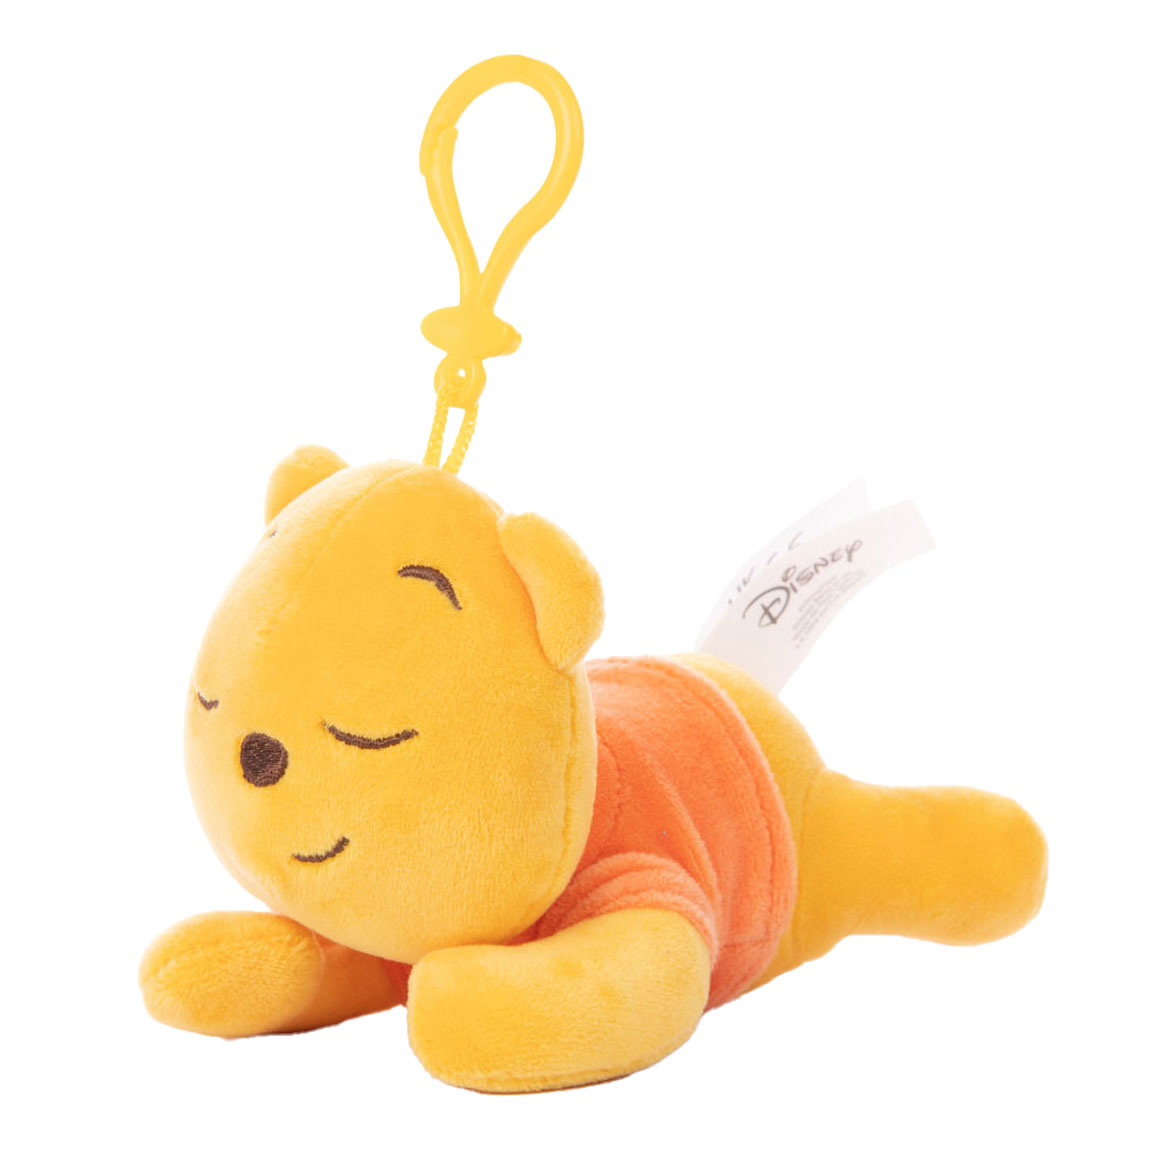 Porte-clés Disney Snuglets - Winnie l'ourson